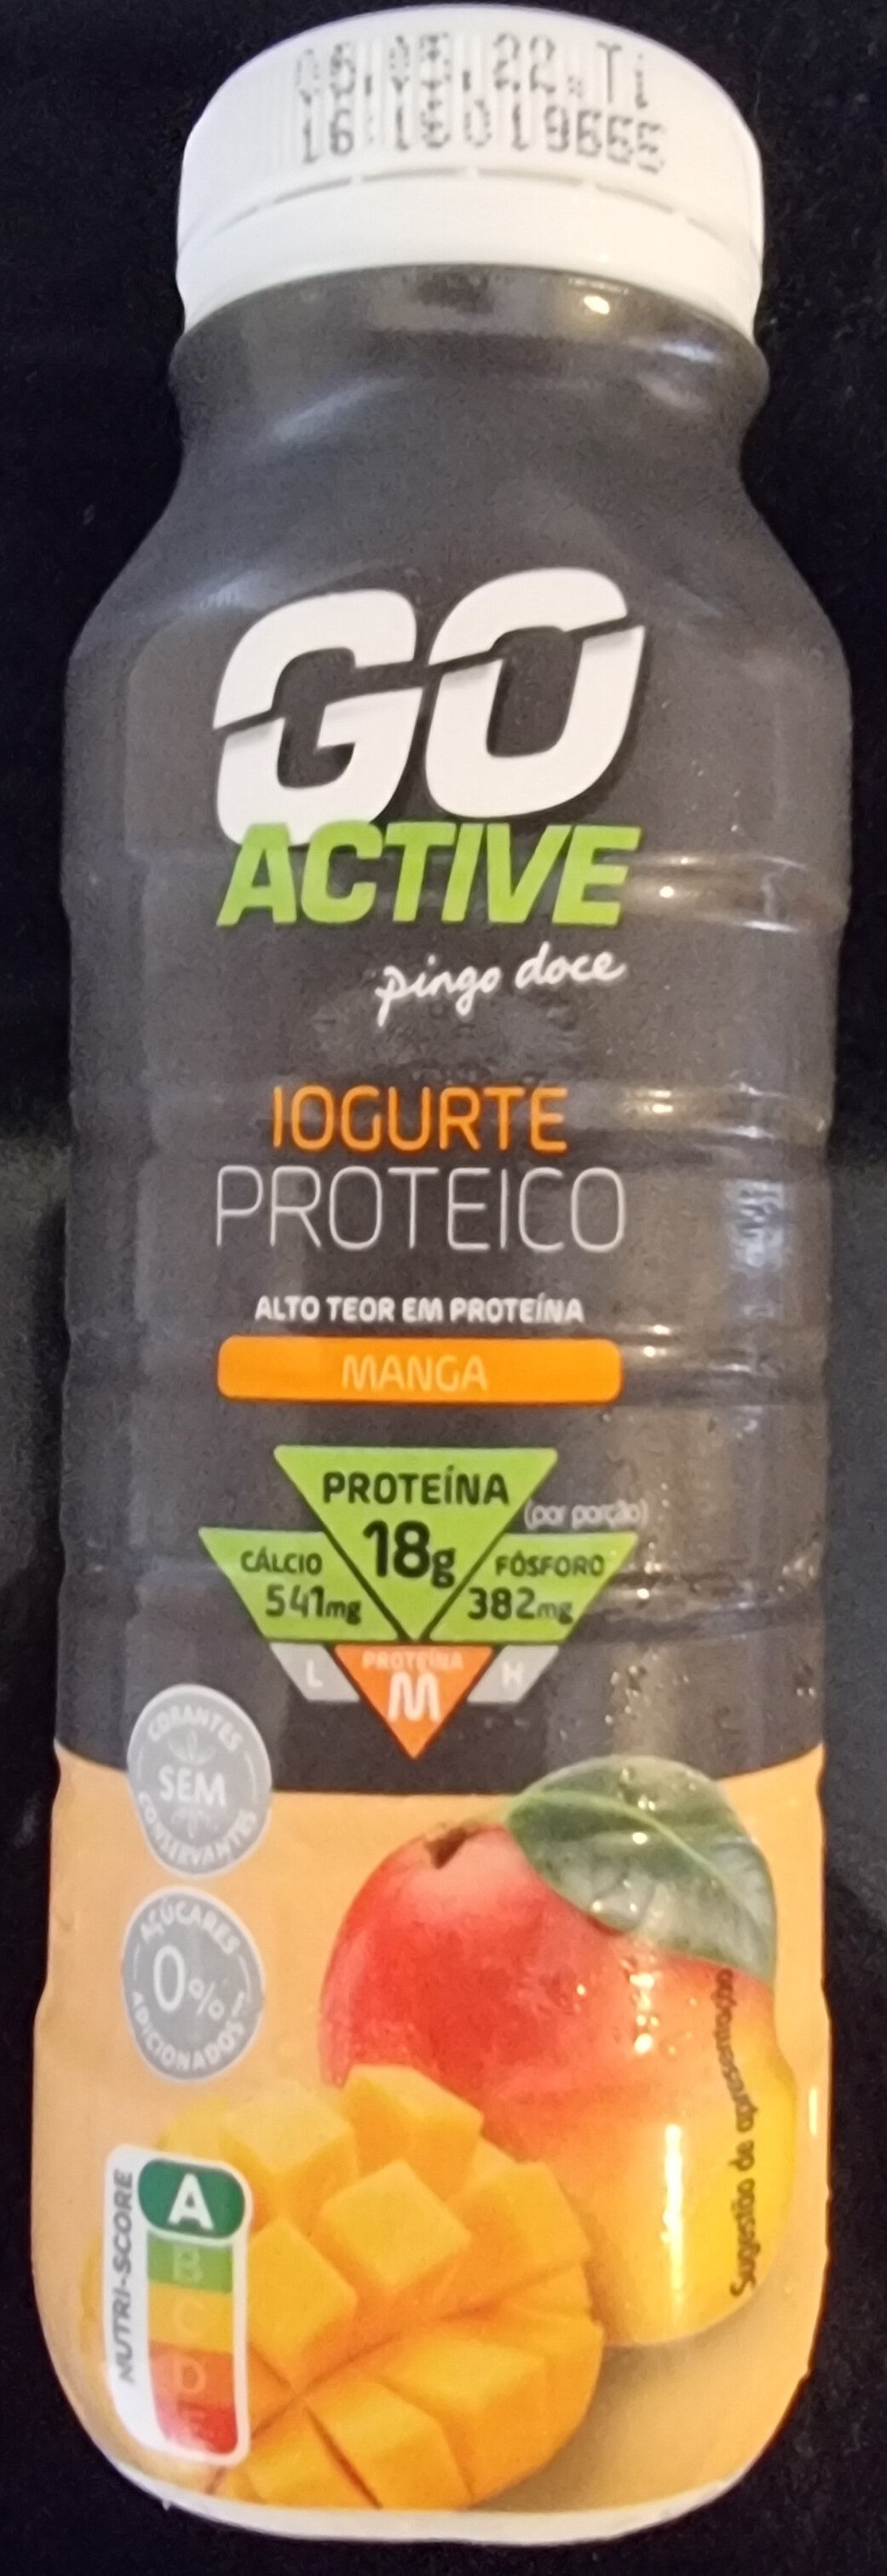 Go Active Iogurte Proteico - Produto